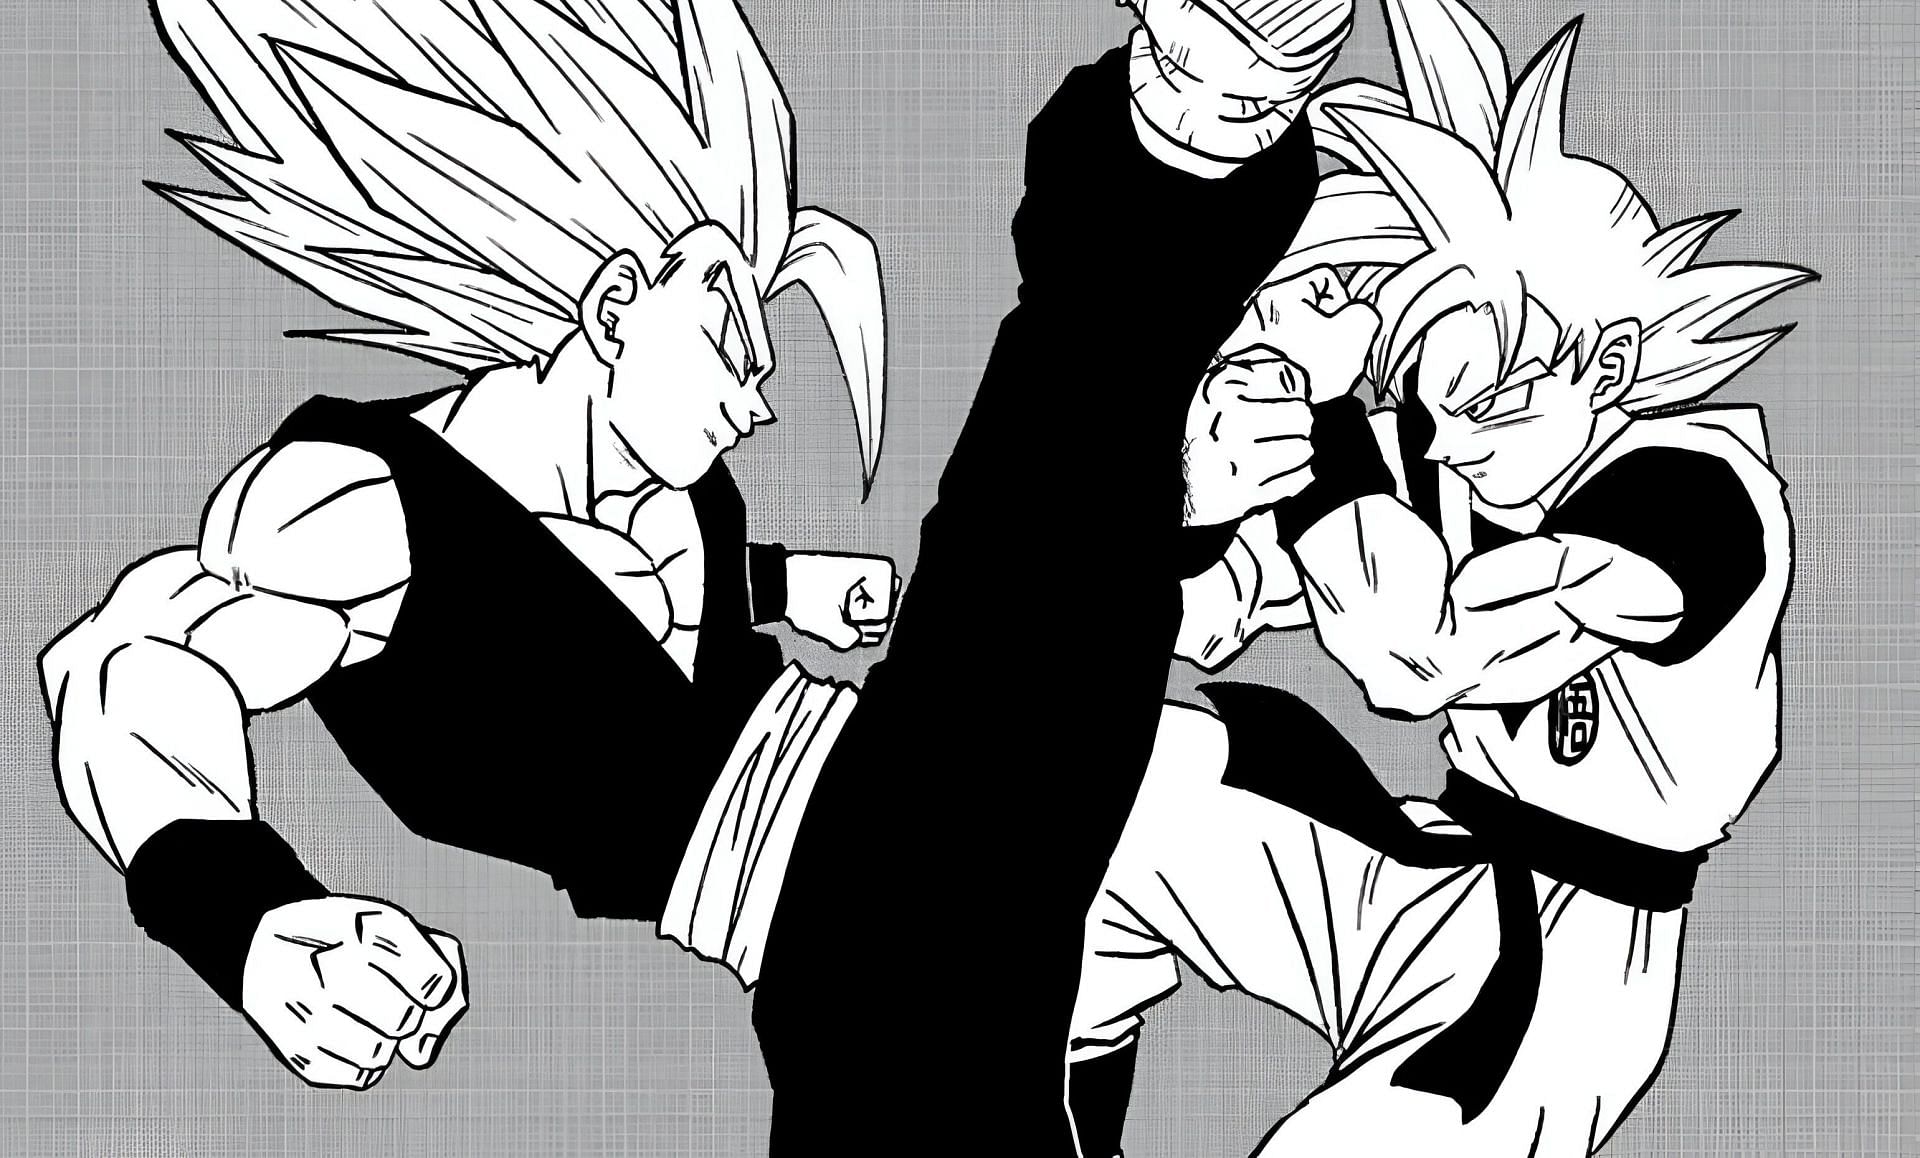 Gohan and Goku as seen in the manga (Image via Shueisha)